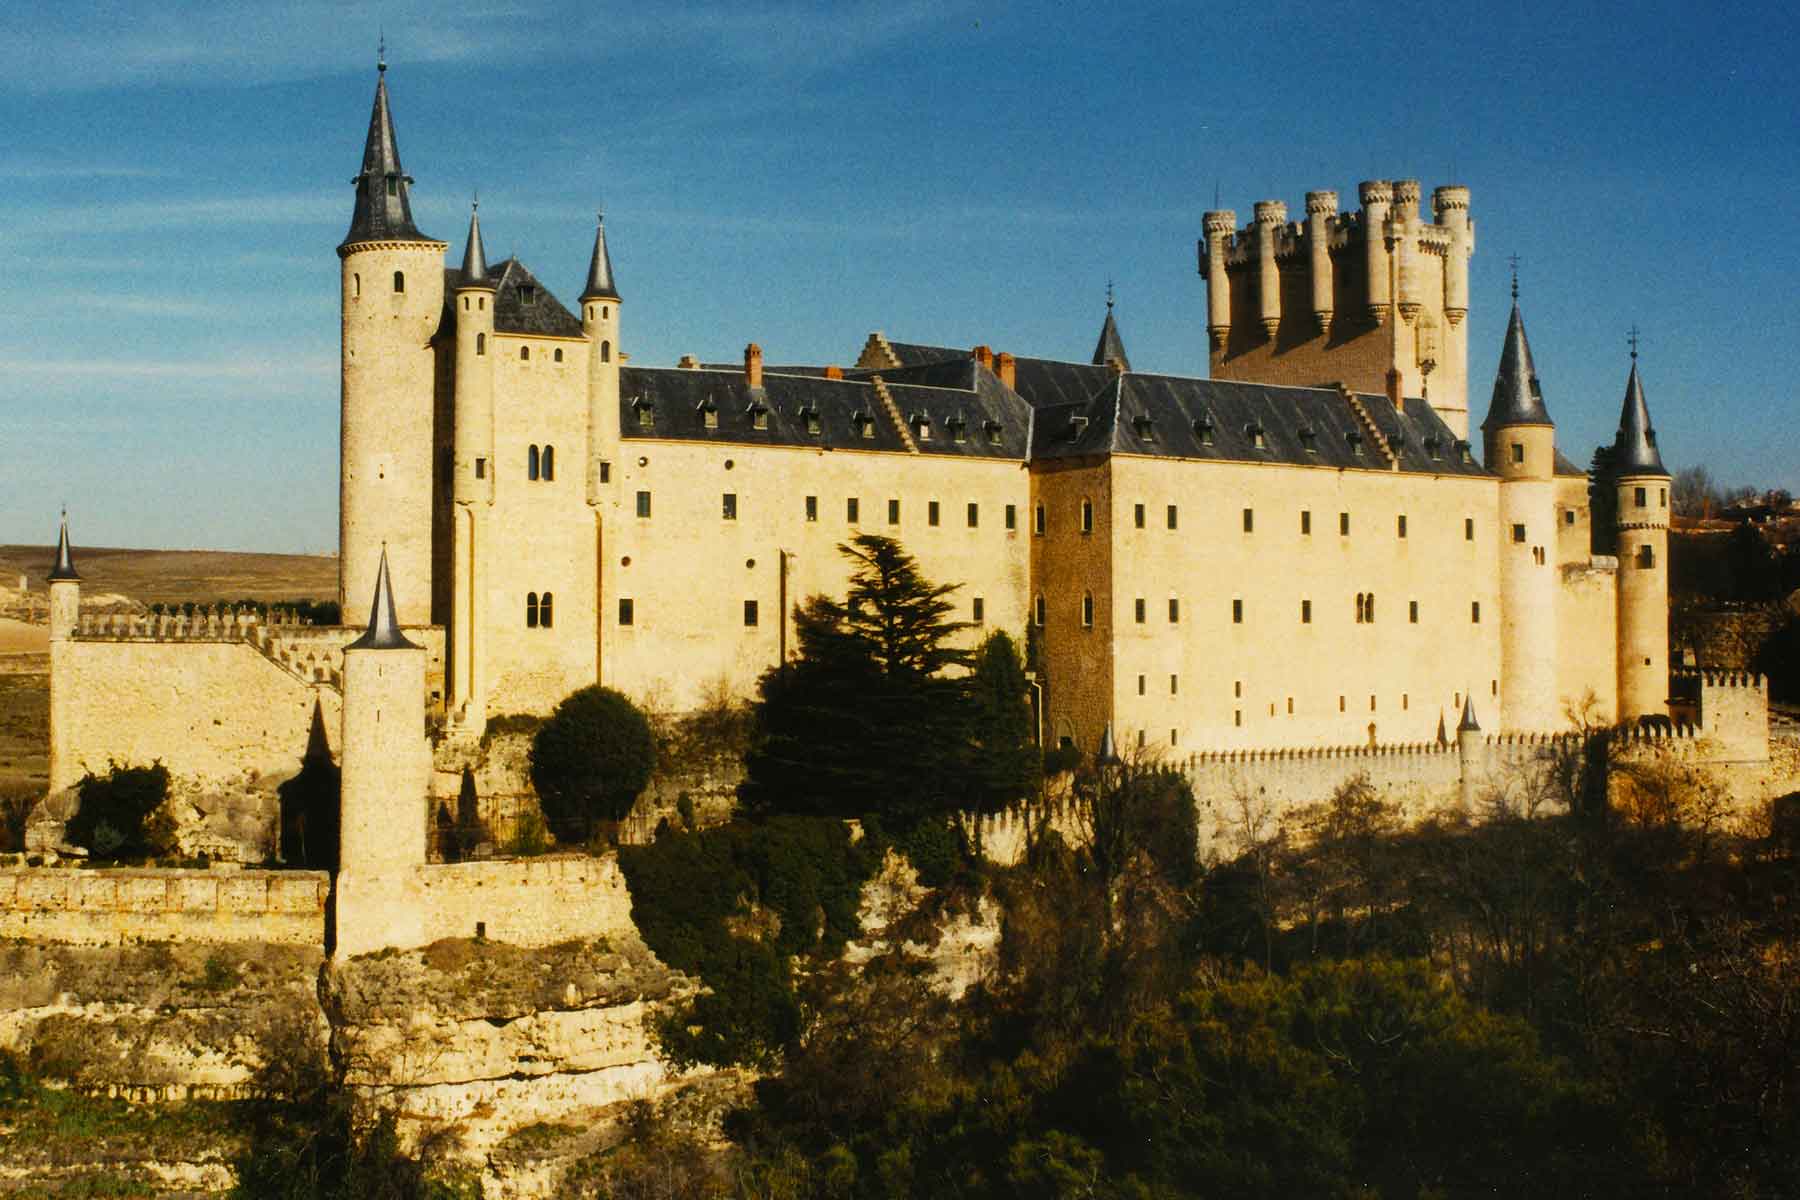 Alcazar - Segovia - Spain - Steven Andrew Martin - Study Abroad Journal 1998